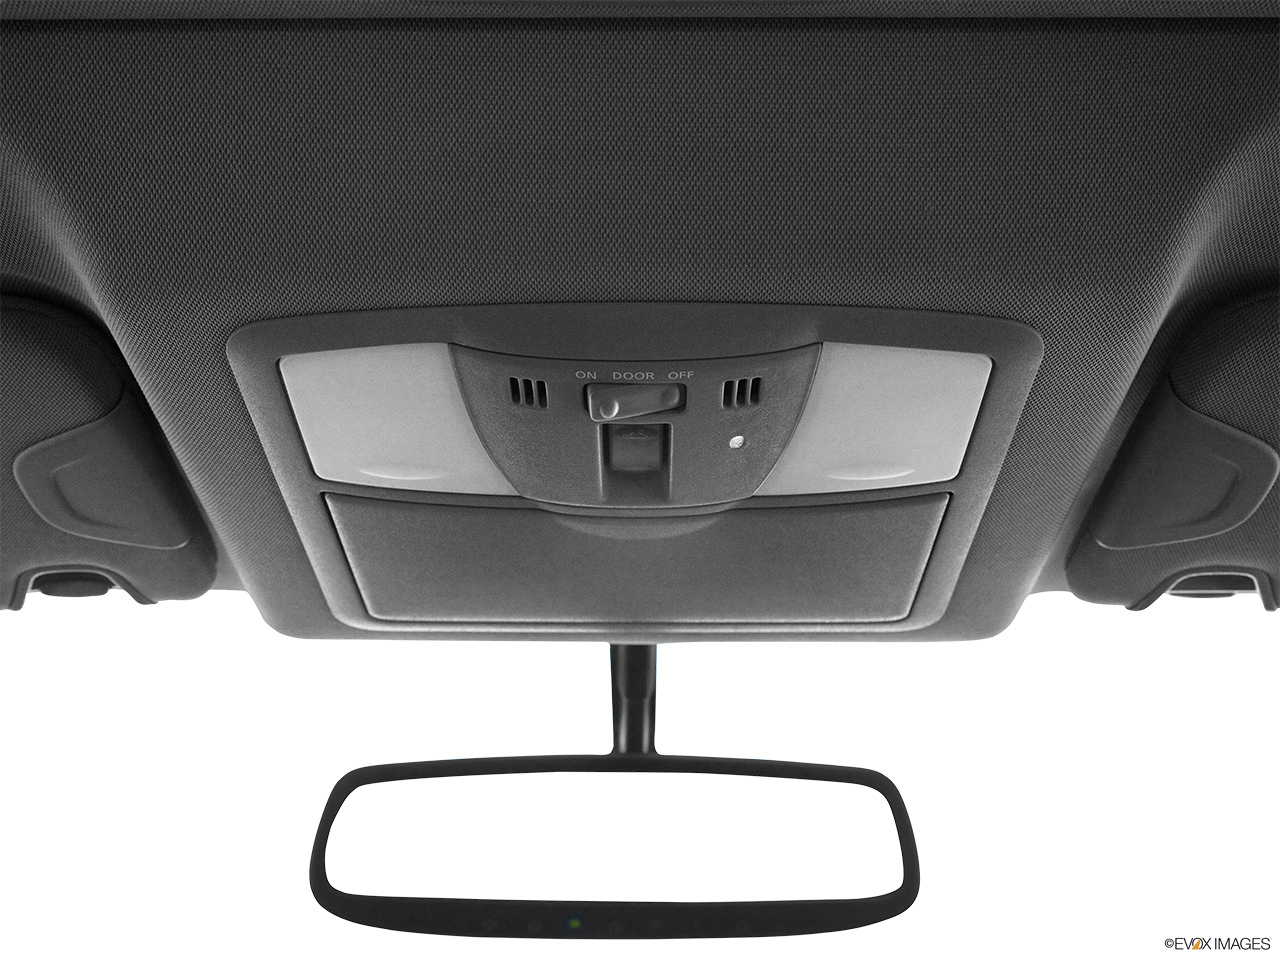 2012 Infiniti EX EX35 Journey Courtesy lamps/ceiling controls. 